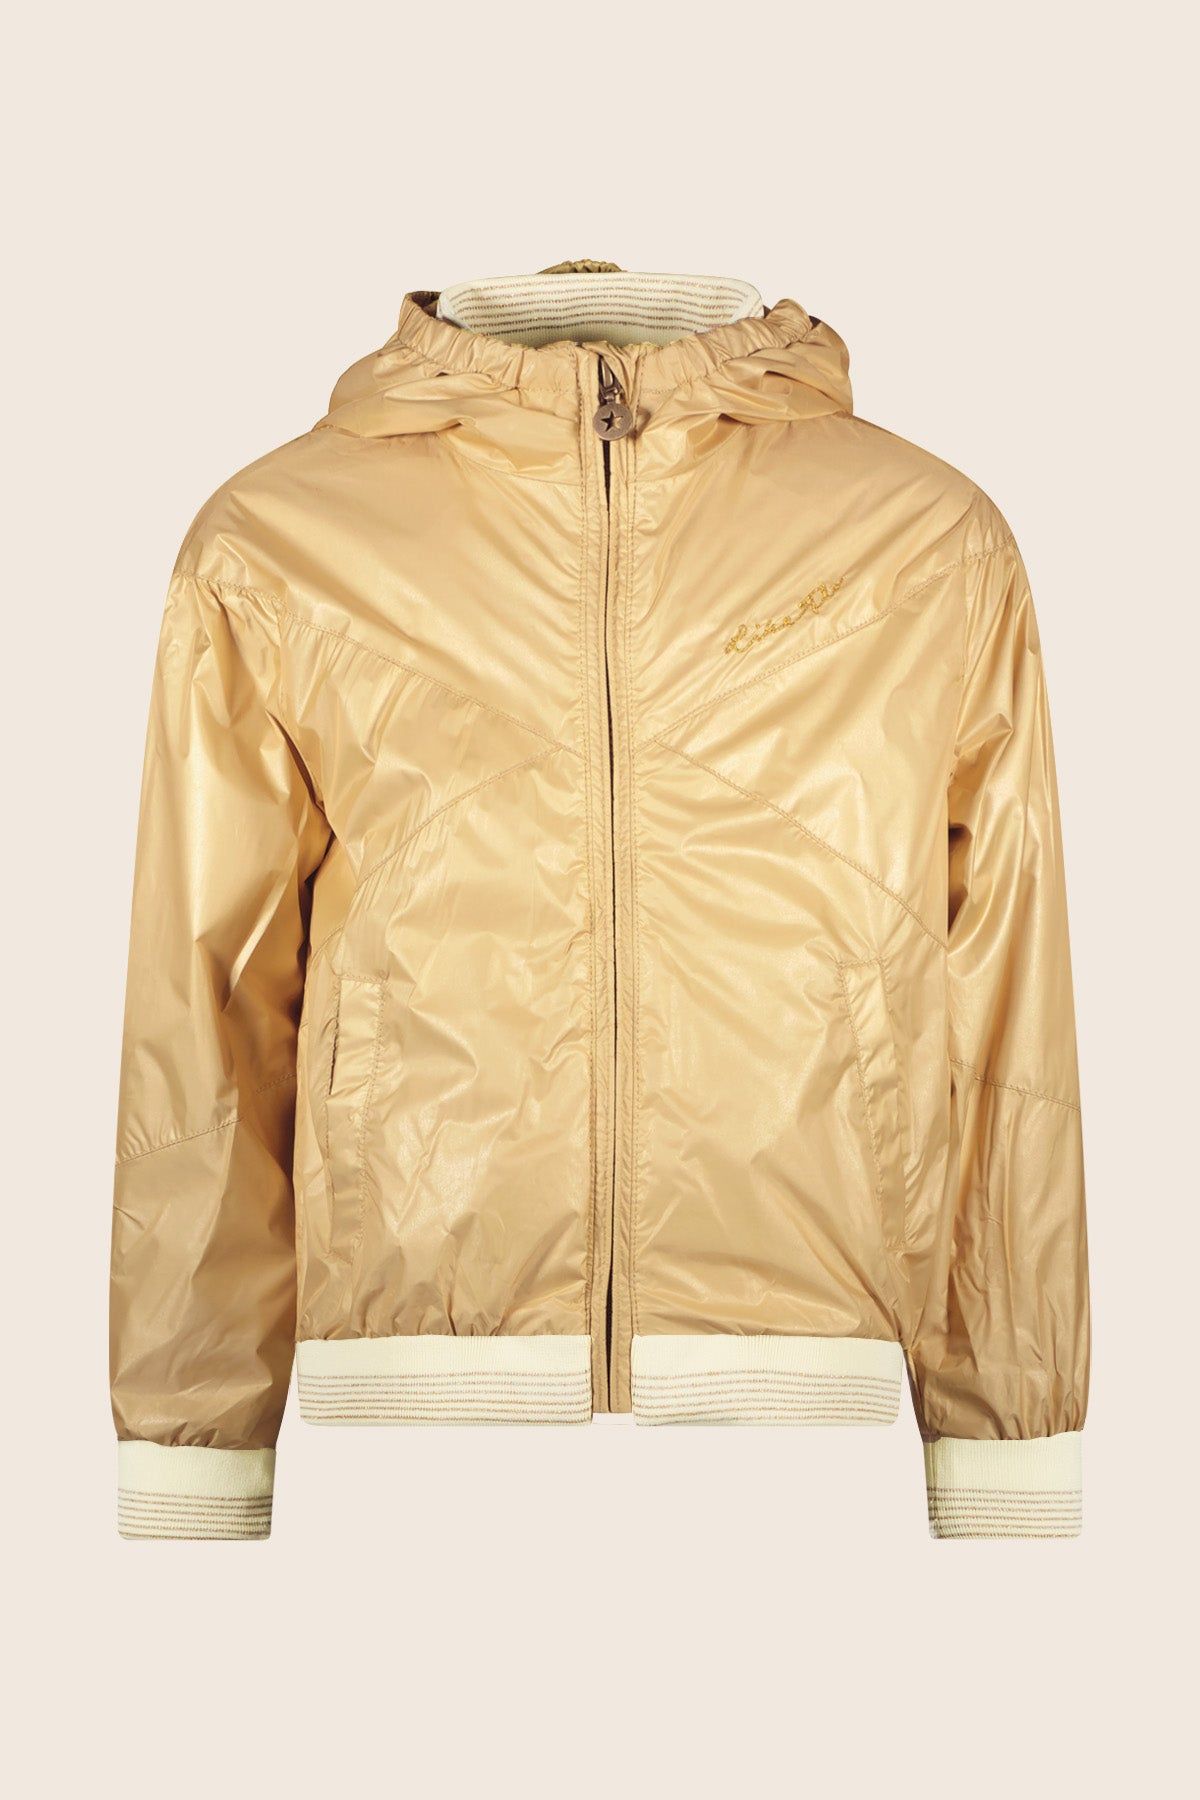 Jas Flo girls hooded summer jacket Gold